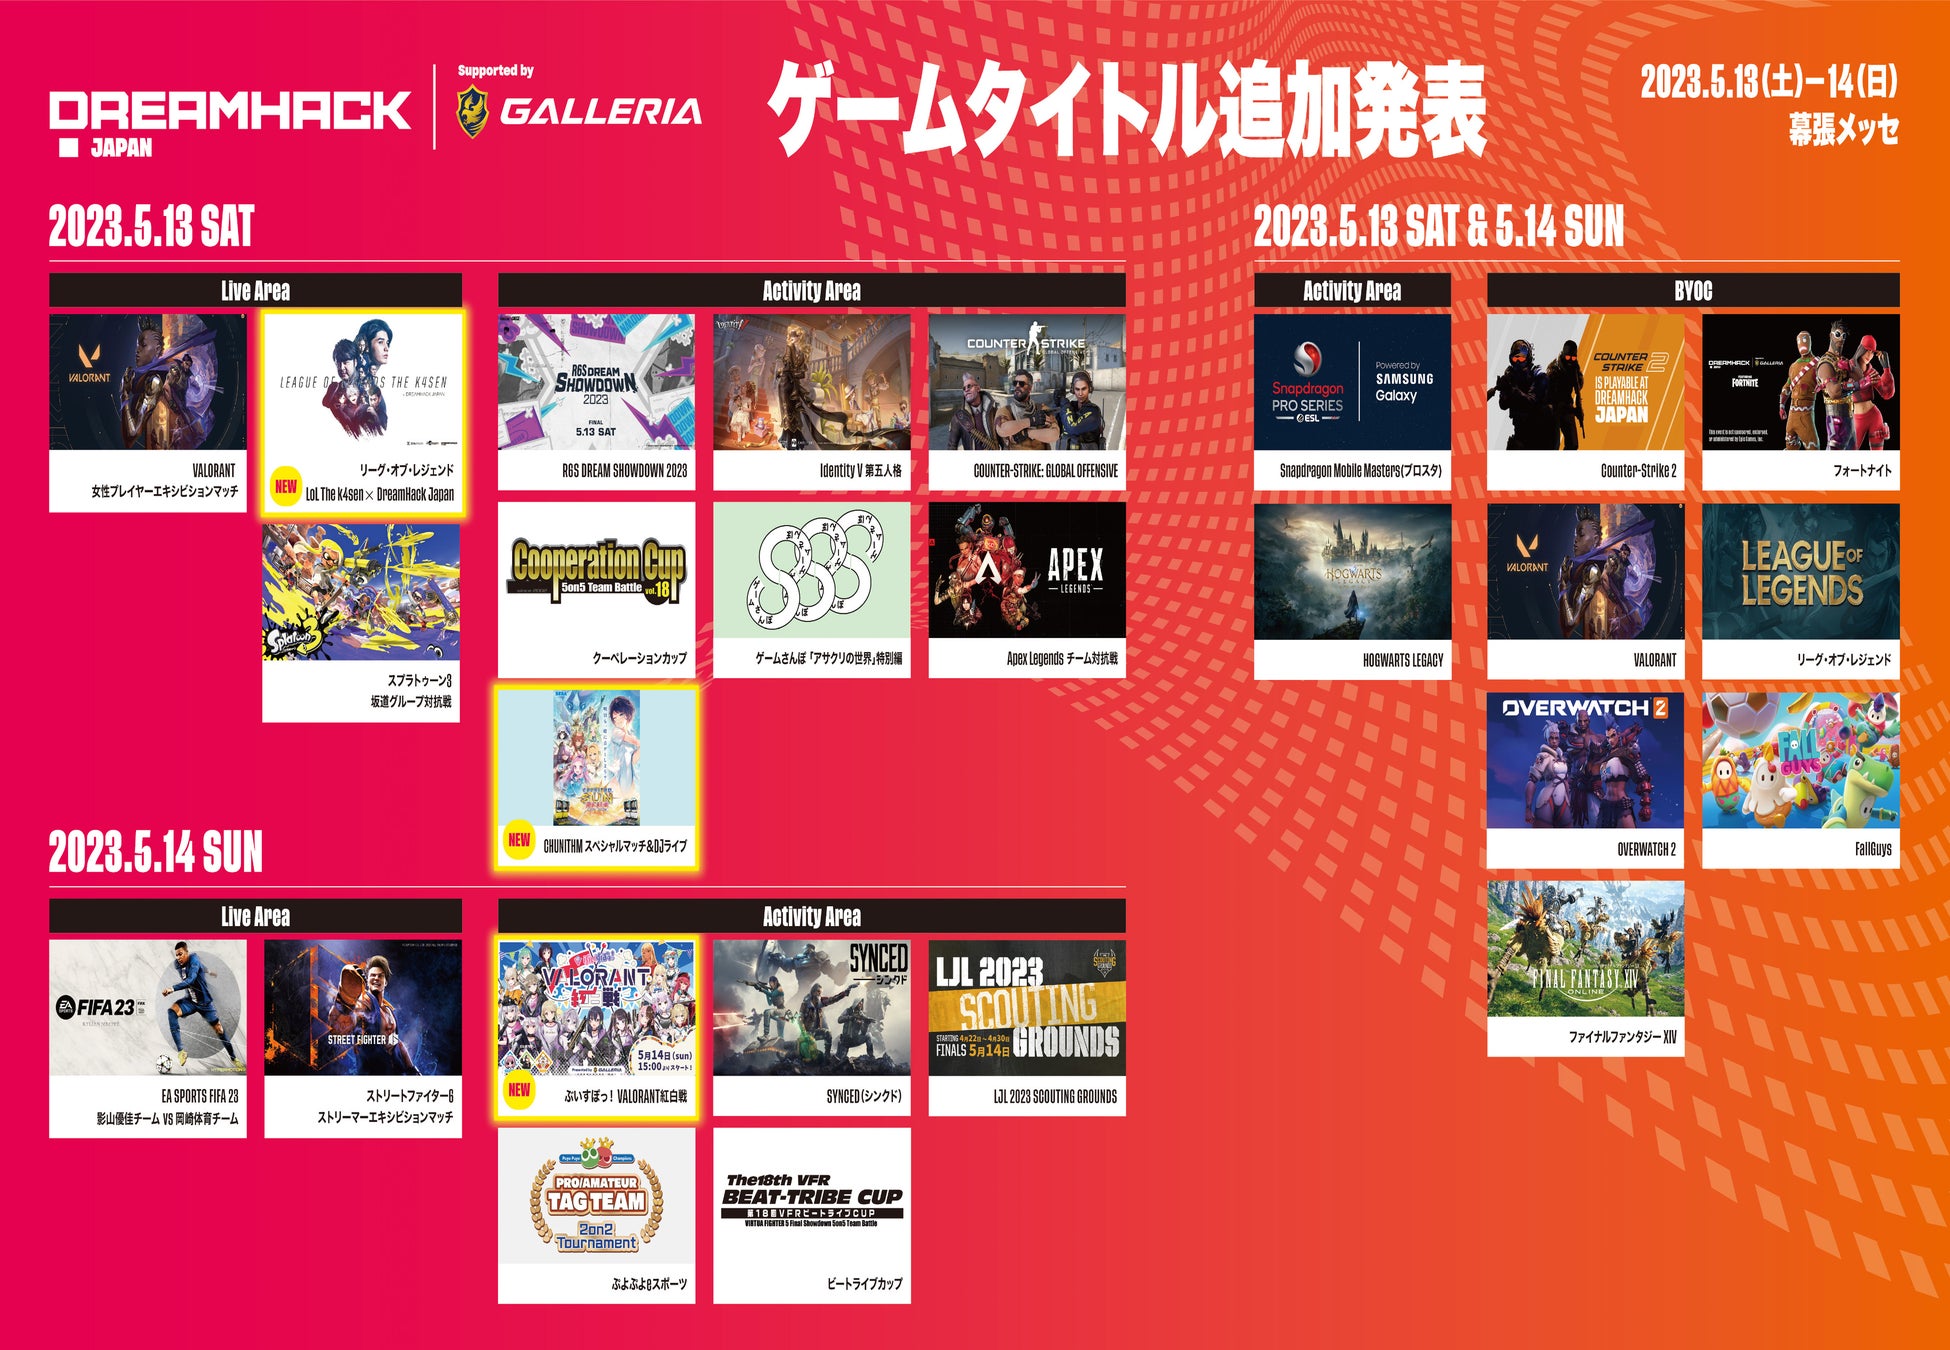 「DreamHack Japan 2023 Supported by GALLERIA」に新たなゲーム大会が追加！リーグ・オブ・レジェンドやVALORANTなどが登場。Cosplay Ticketsも無料化。チケットは4月29日から一般発売開始。